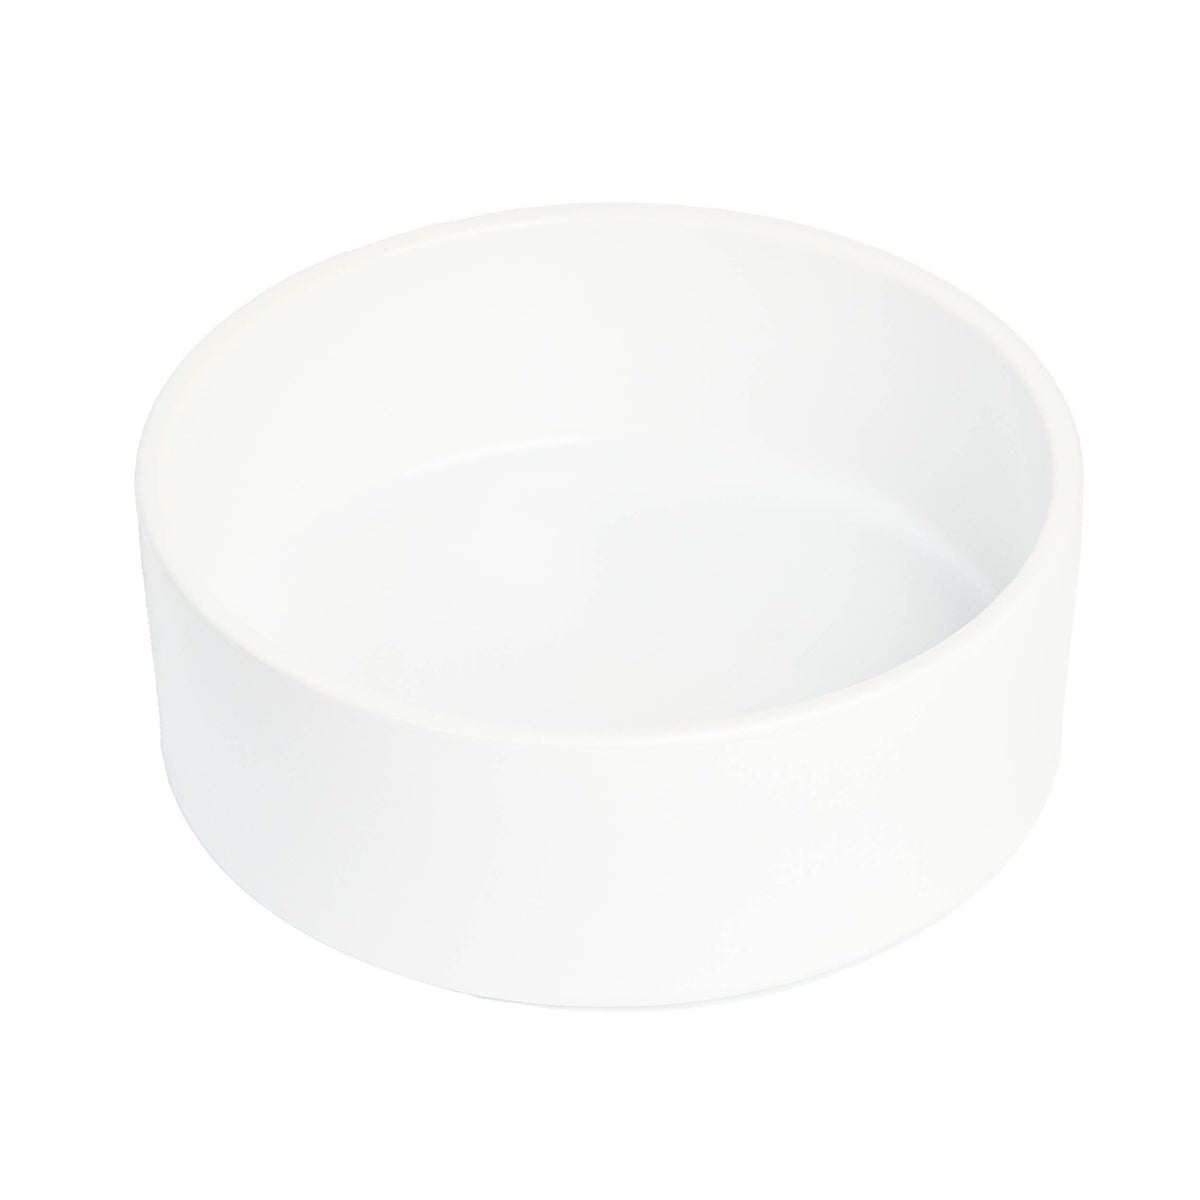 Personalised bowl for cats / ceramic - 22oz 650ml (design 4)